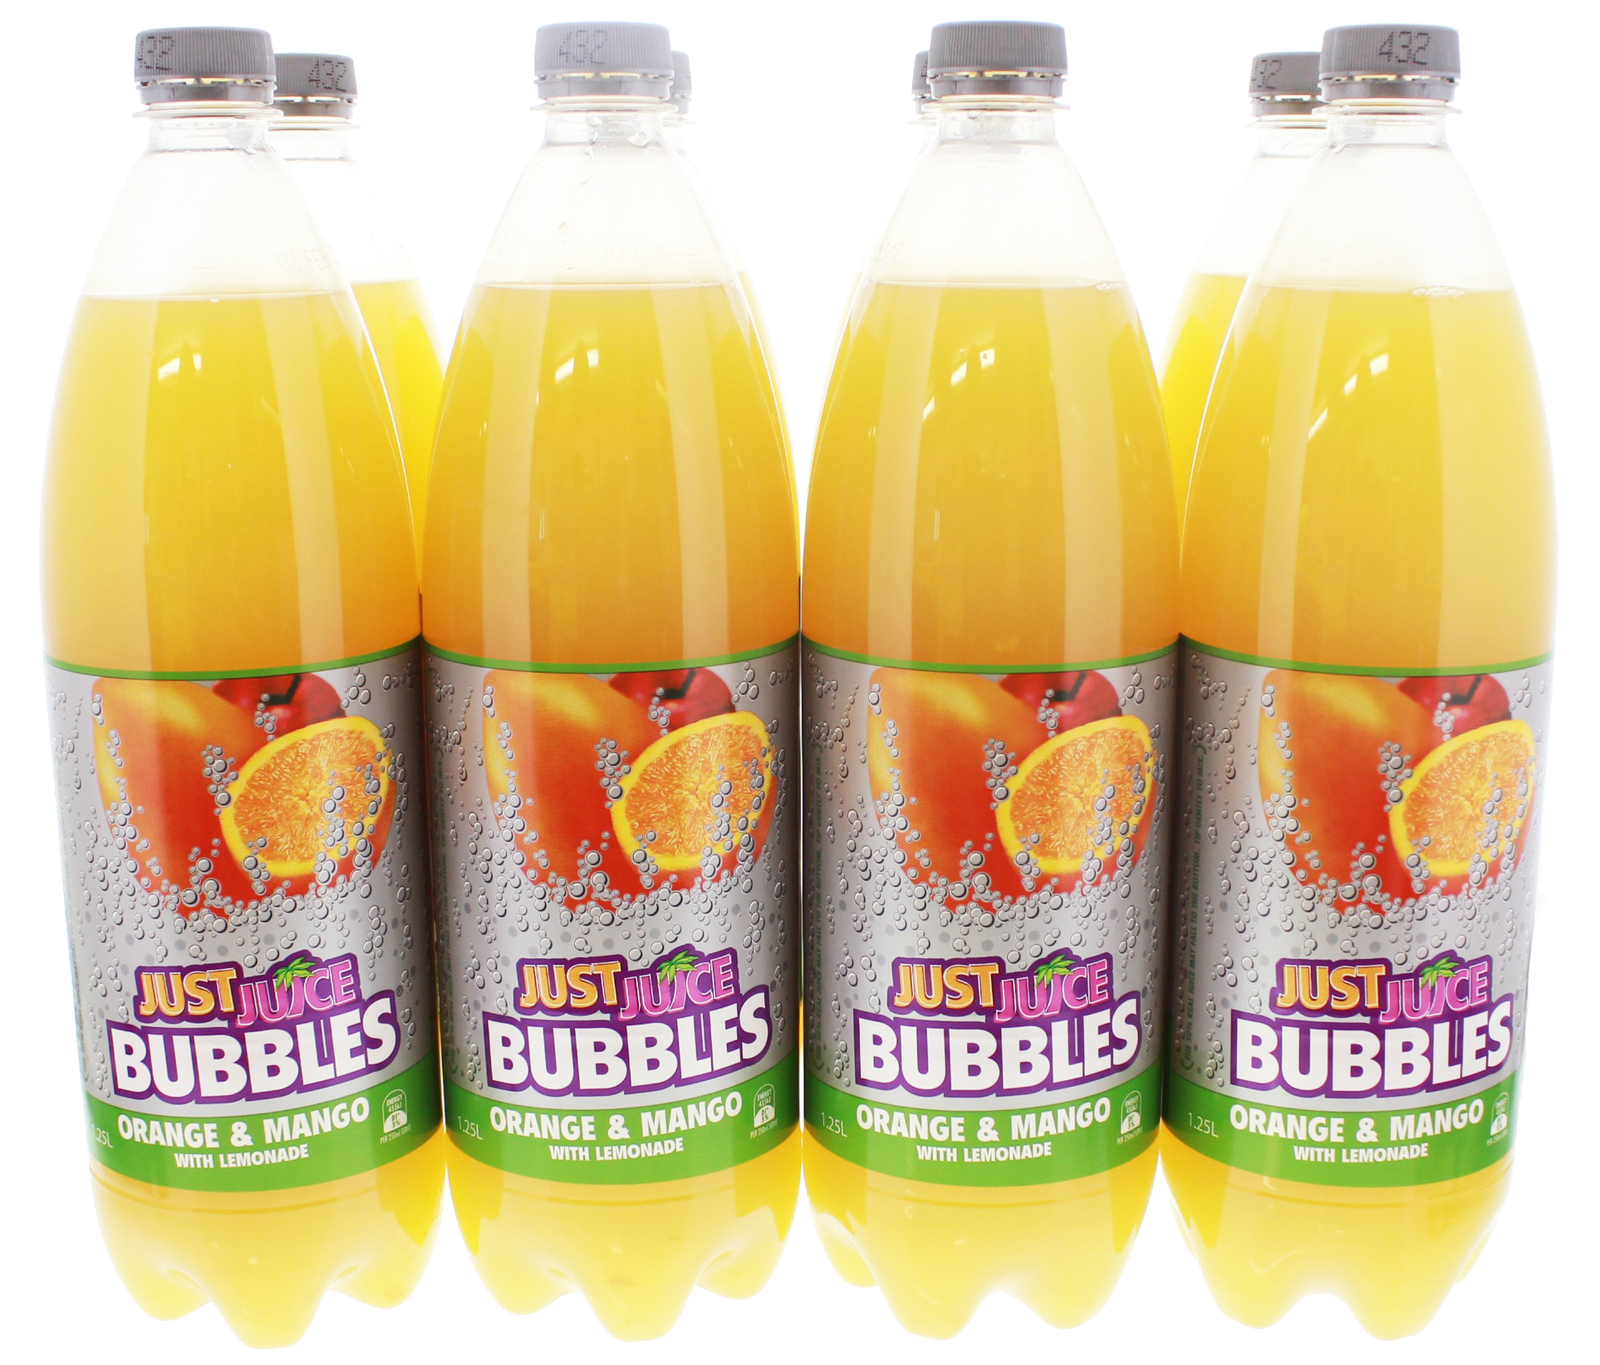 Just Juice Bubbles Orange & Mango | at Mighty Ape NZ